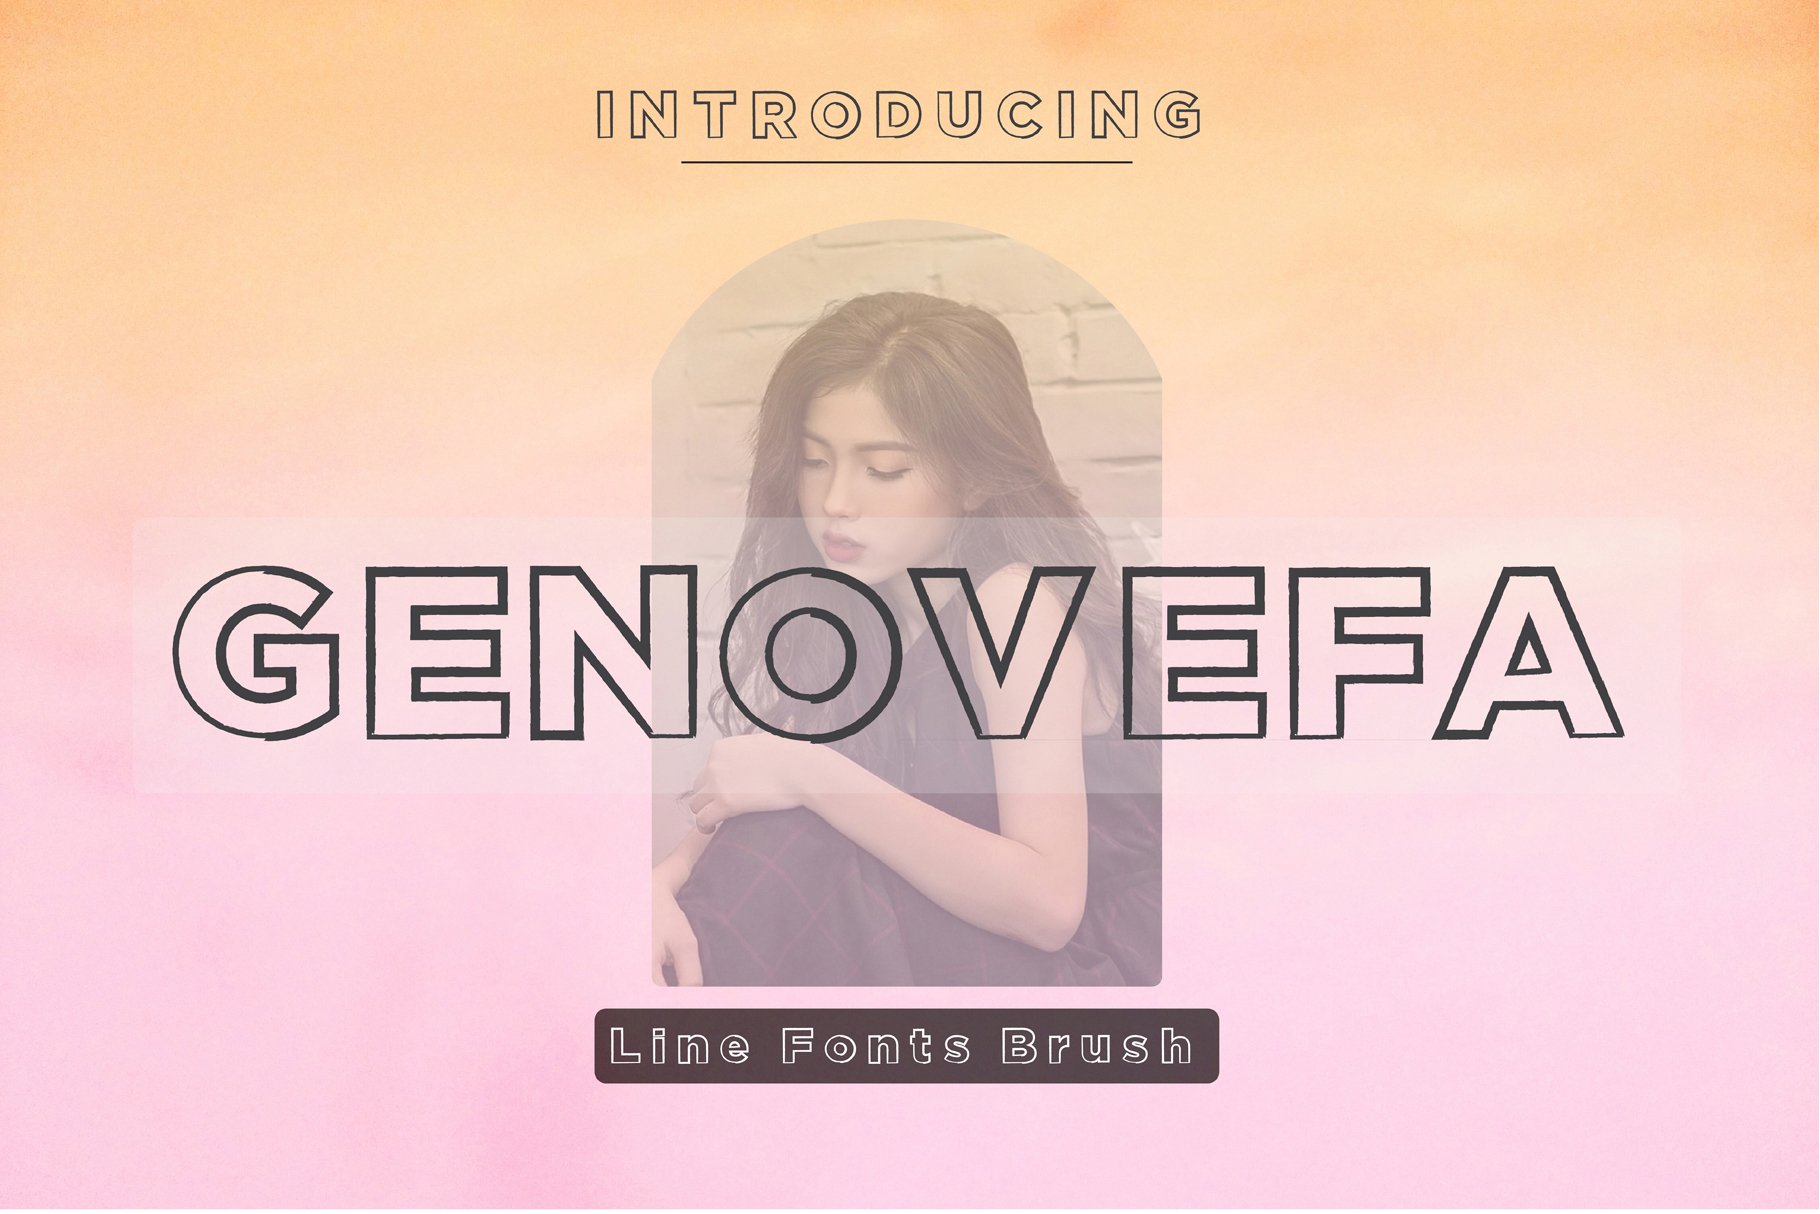 Genovefa cover image.